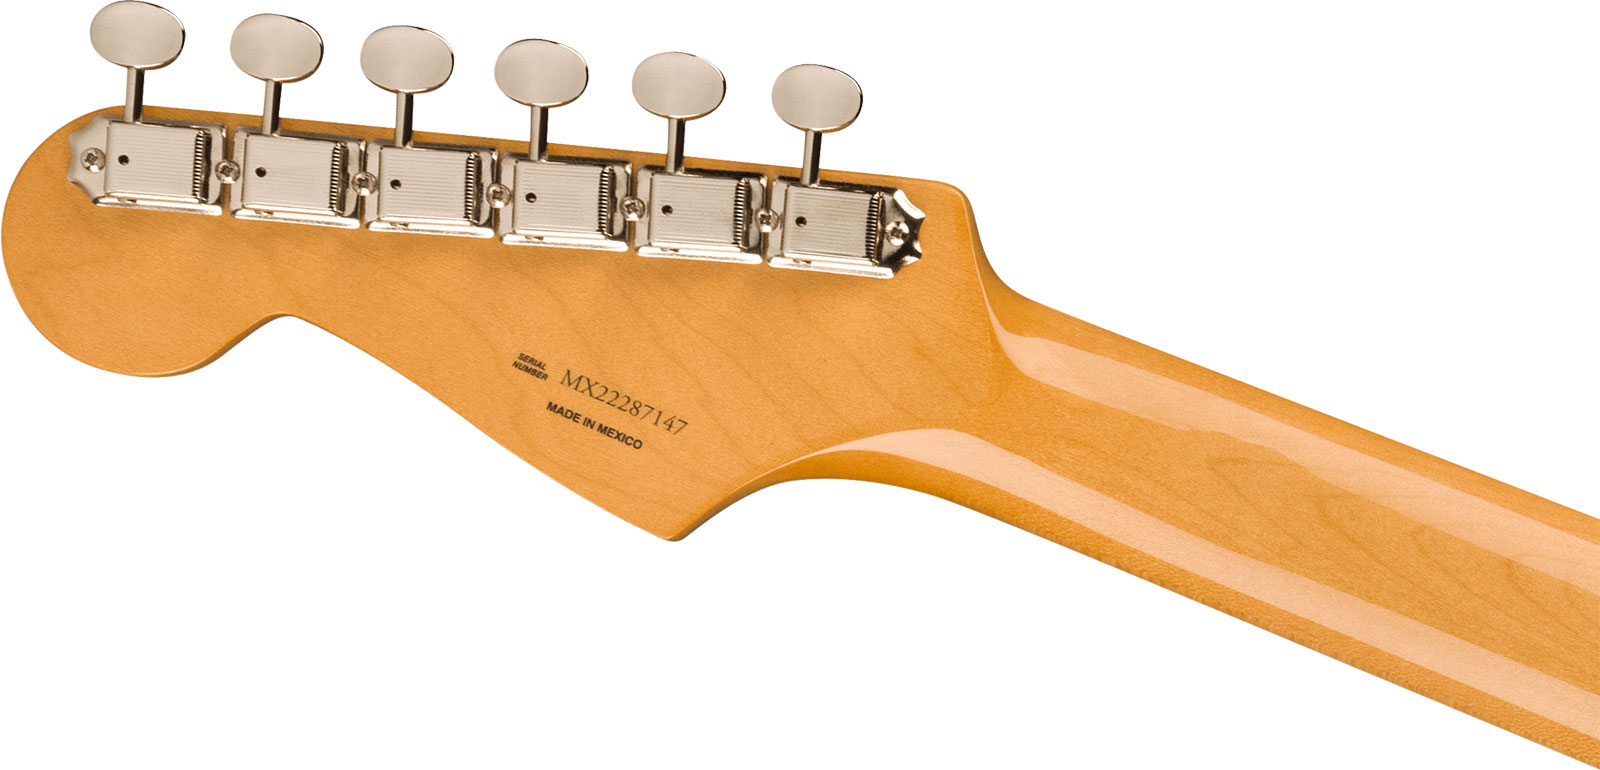 Fender Strat 60s Vintera 2 Mex 3s Trem Rw - Lake Placid Blue - Str shape electric guitar - Variation 3